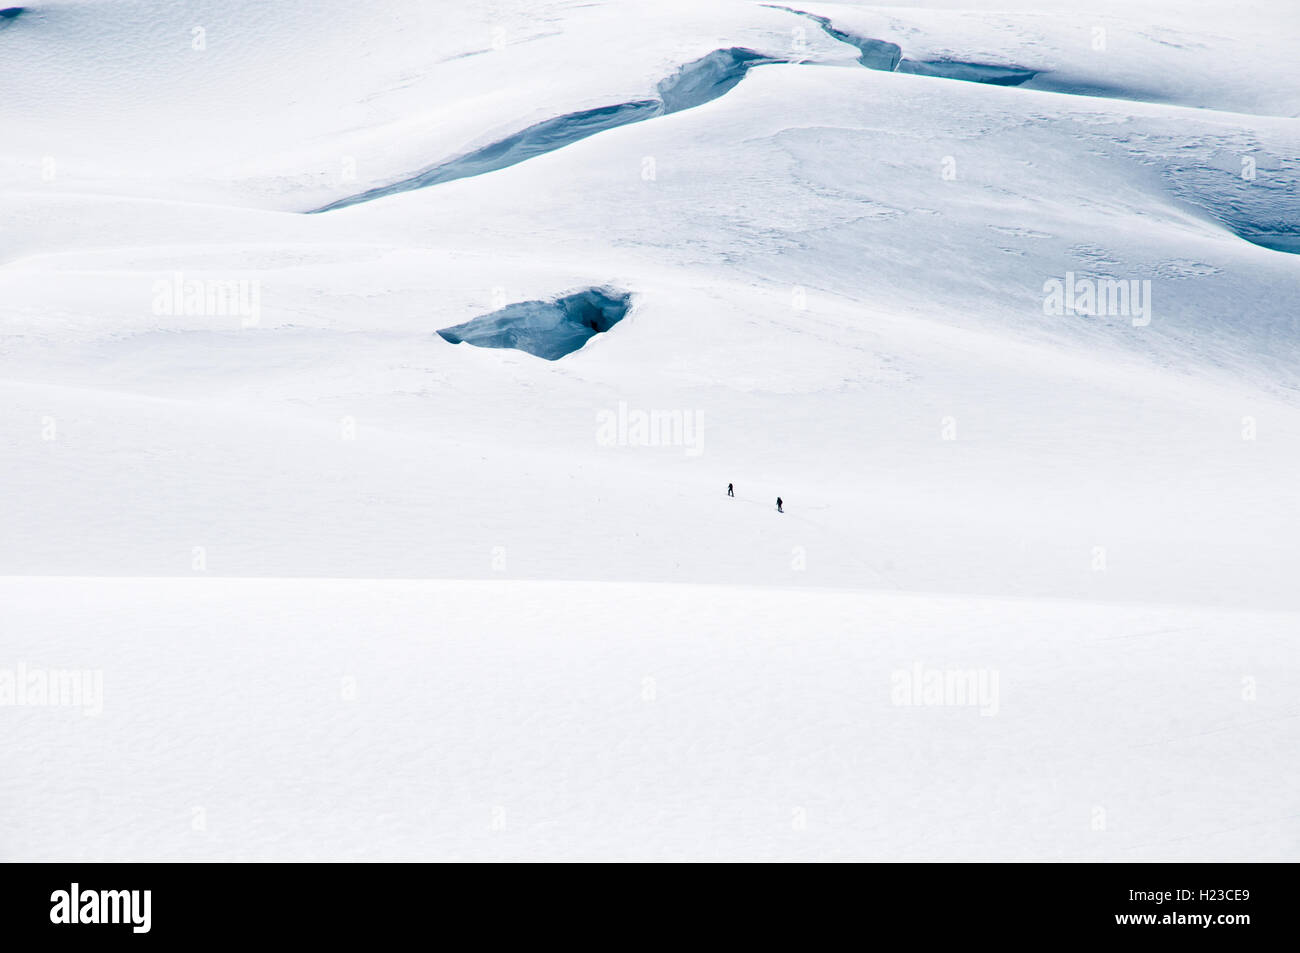 Two skiers trek near a crevasse in the icefields of the Saint Elias Mountains, in Kluane National Park, Yukon Territory, Canada. Stock Photo